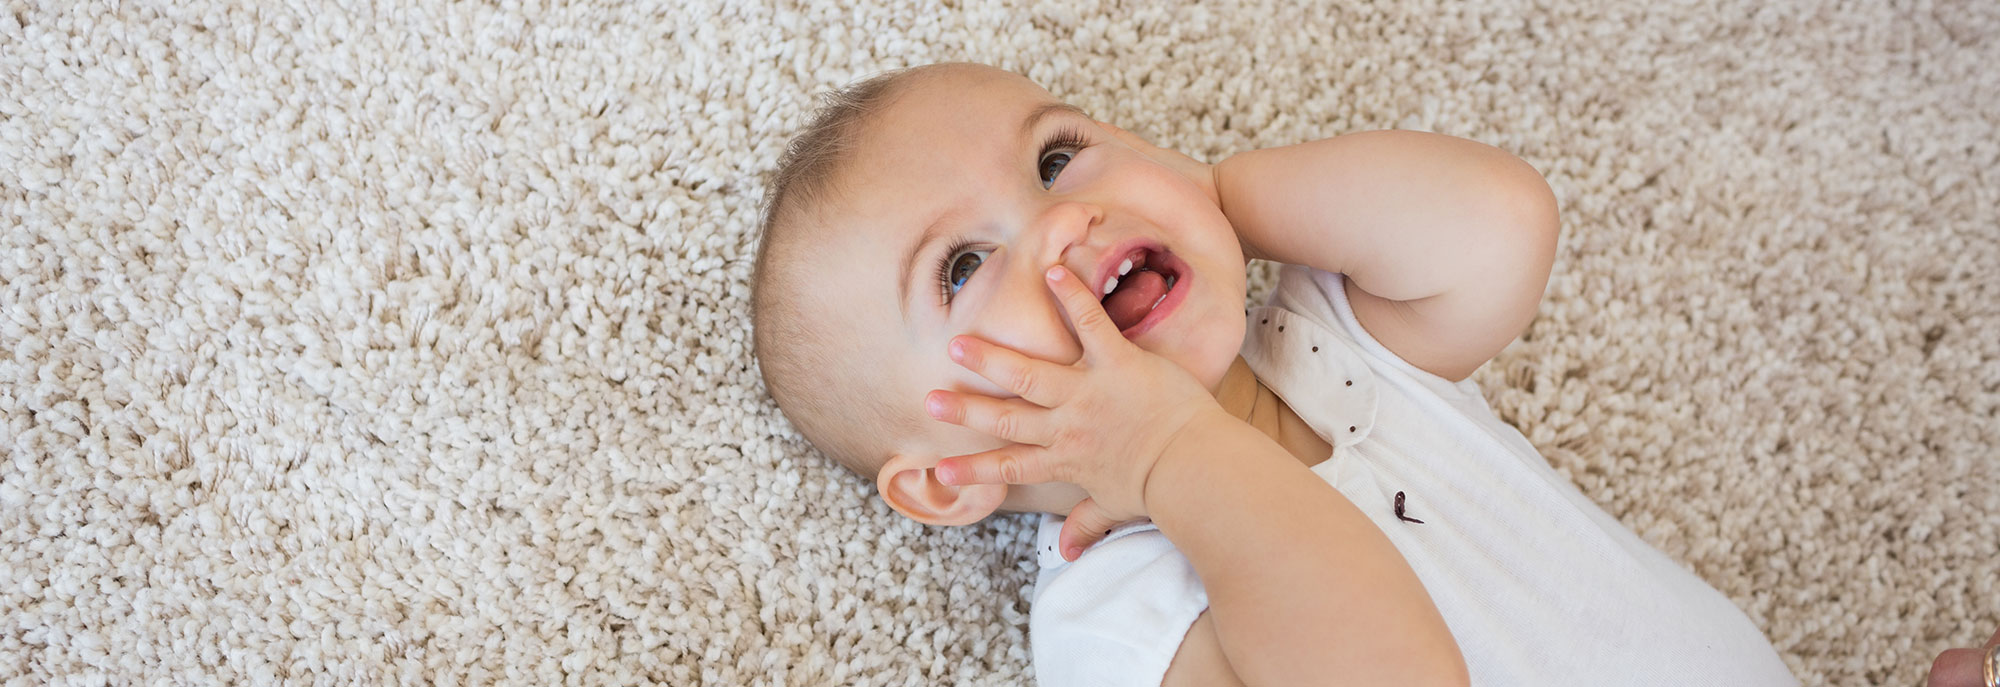 Baby Laughing on carpet